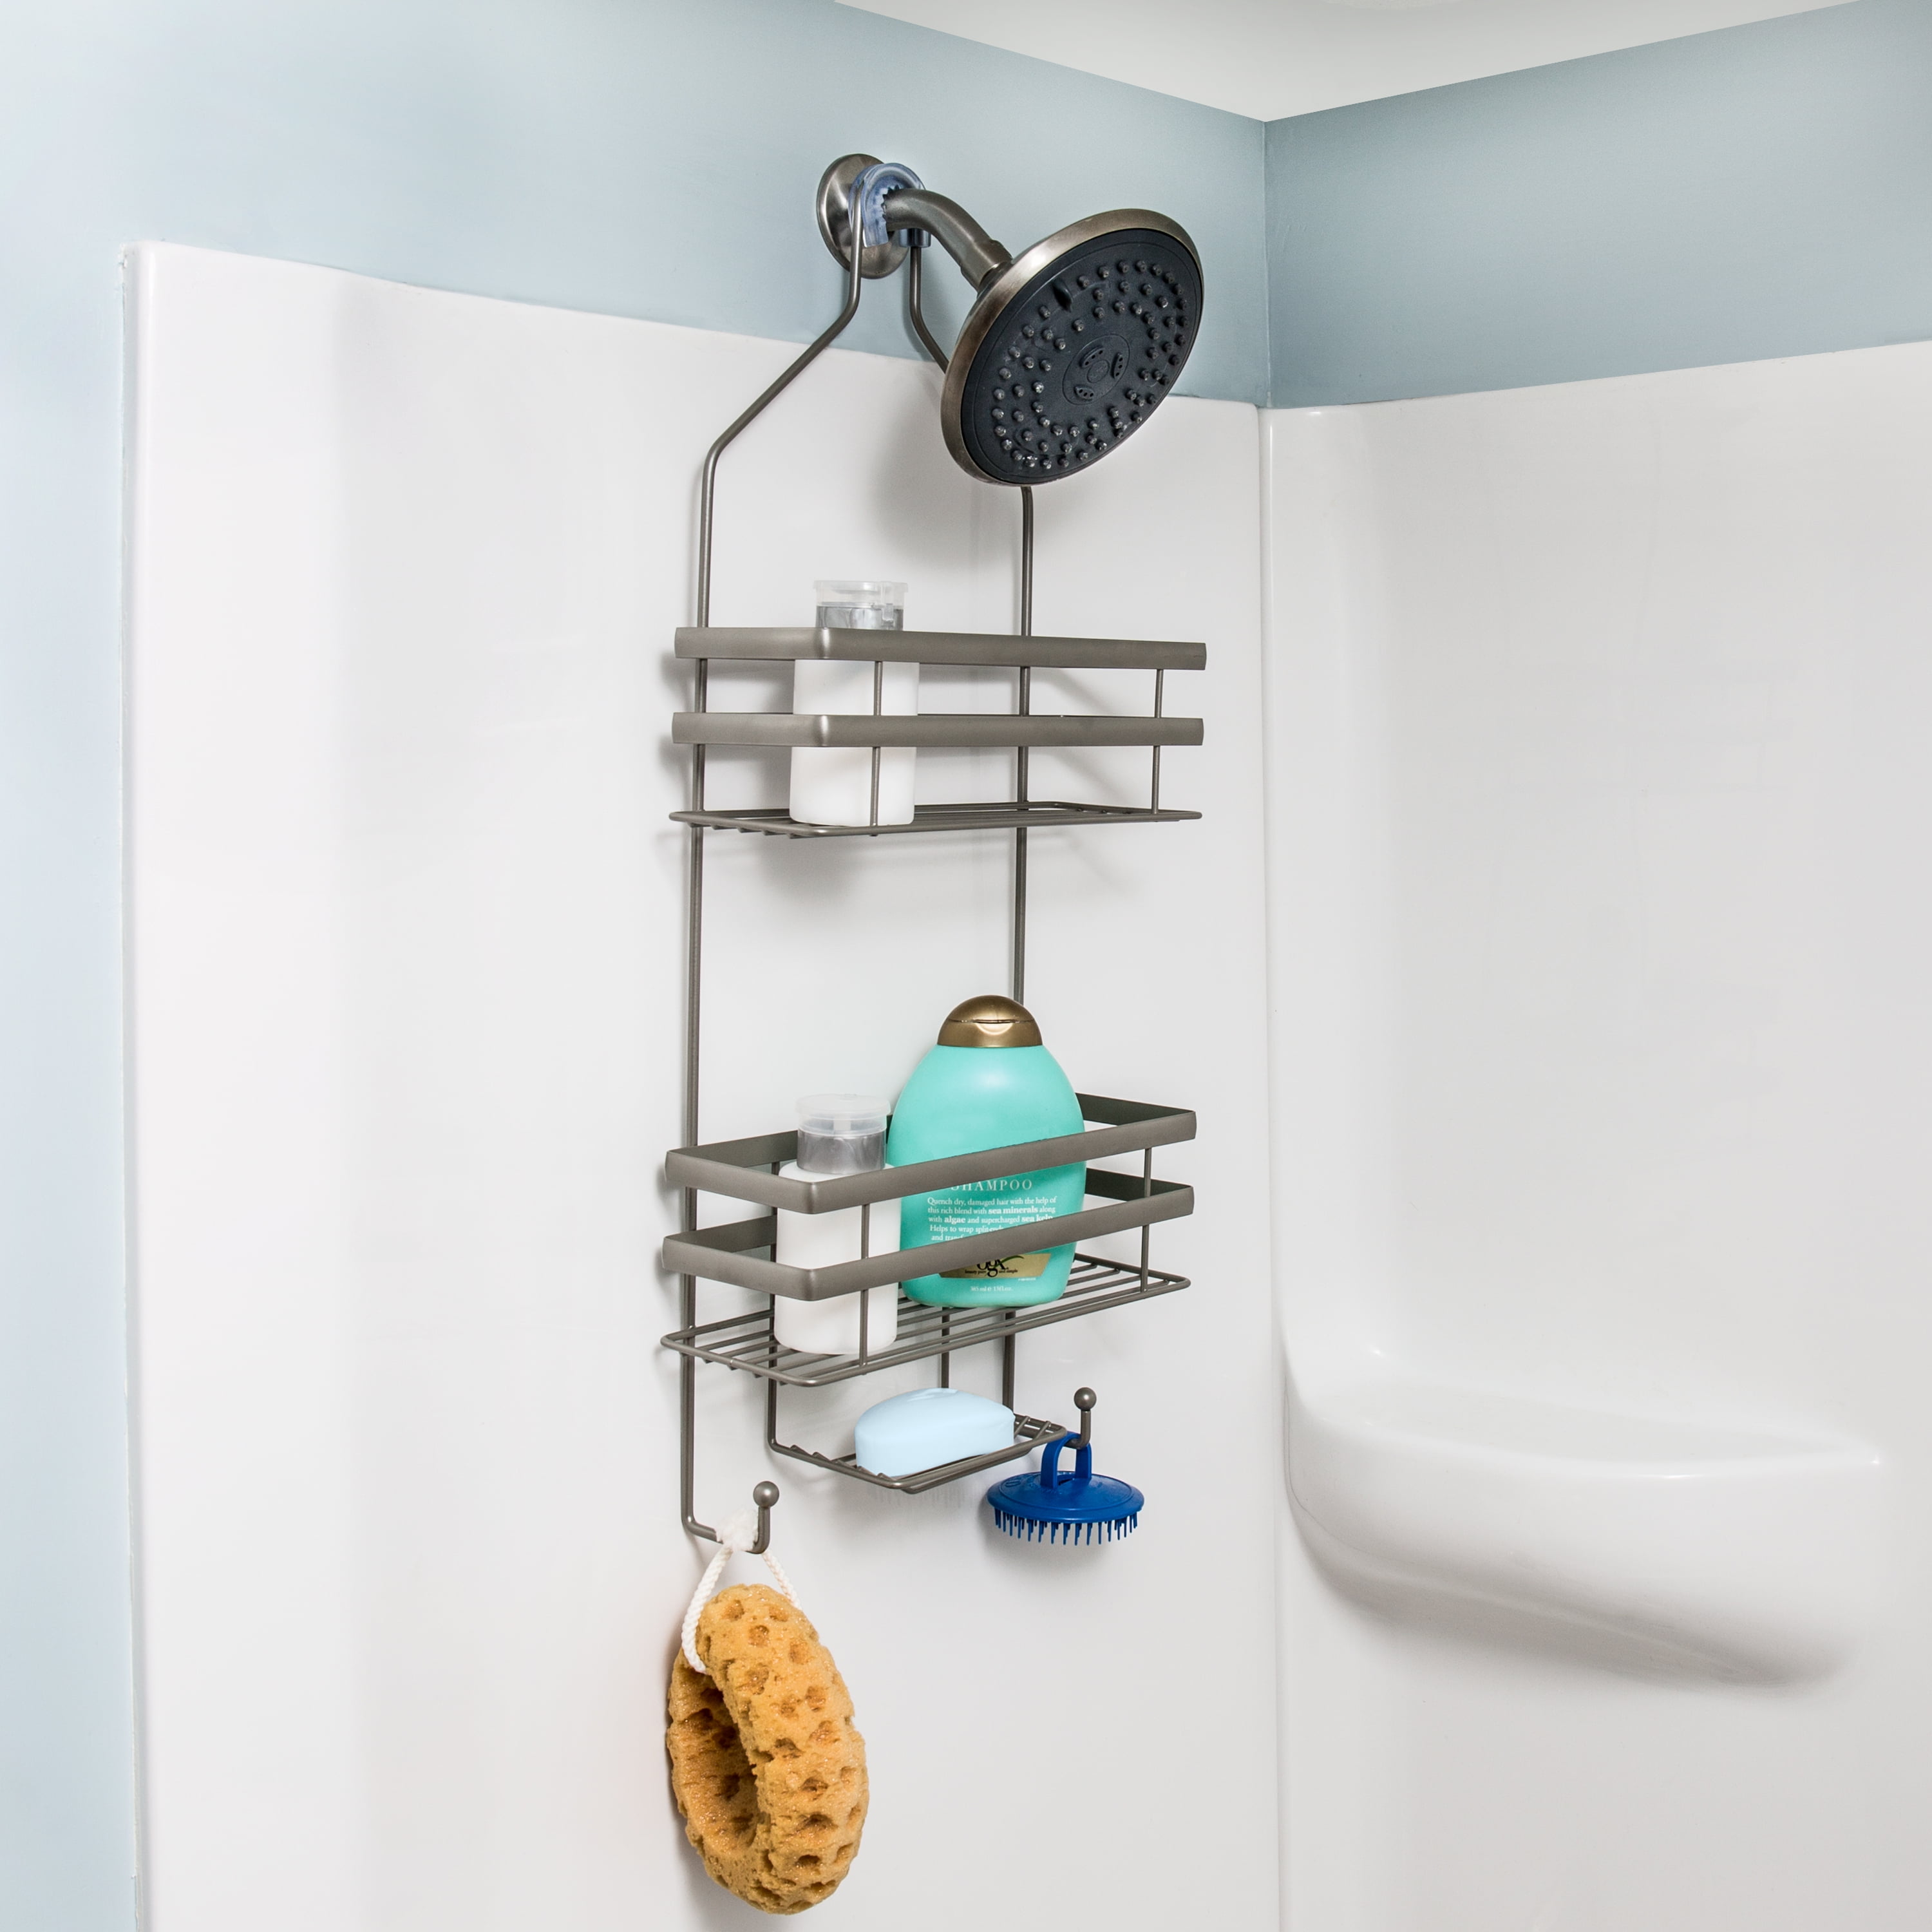 Moforoco Over The Door Shower Caddy, Hanging Shower Organizer Storage,  4-Tier Black Shower Head Rack Shelves for Inside Shower, Home Decor  Bathroom